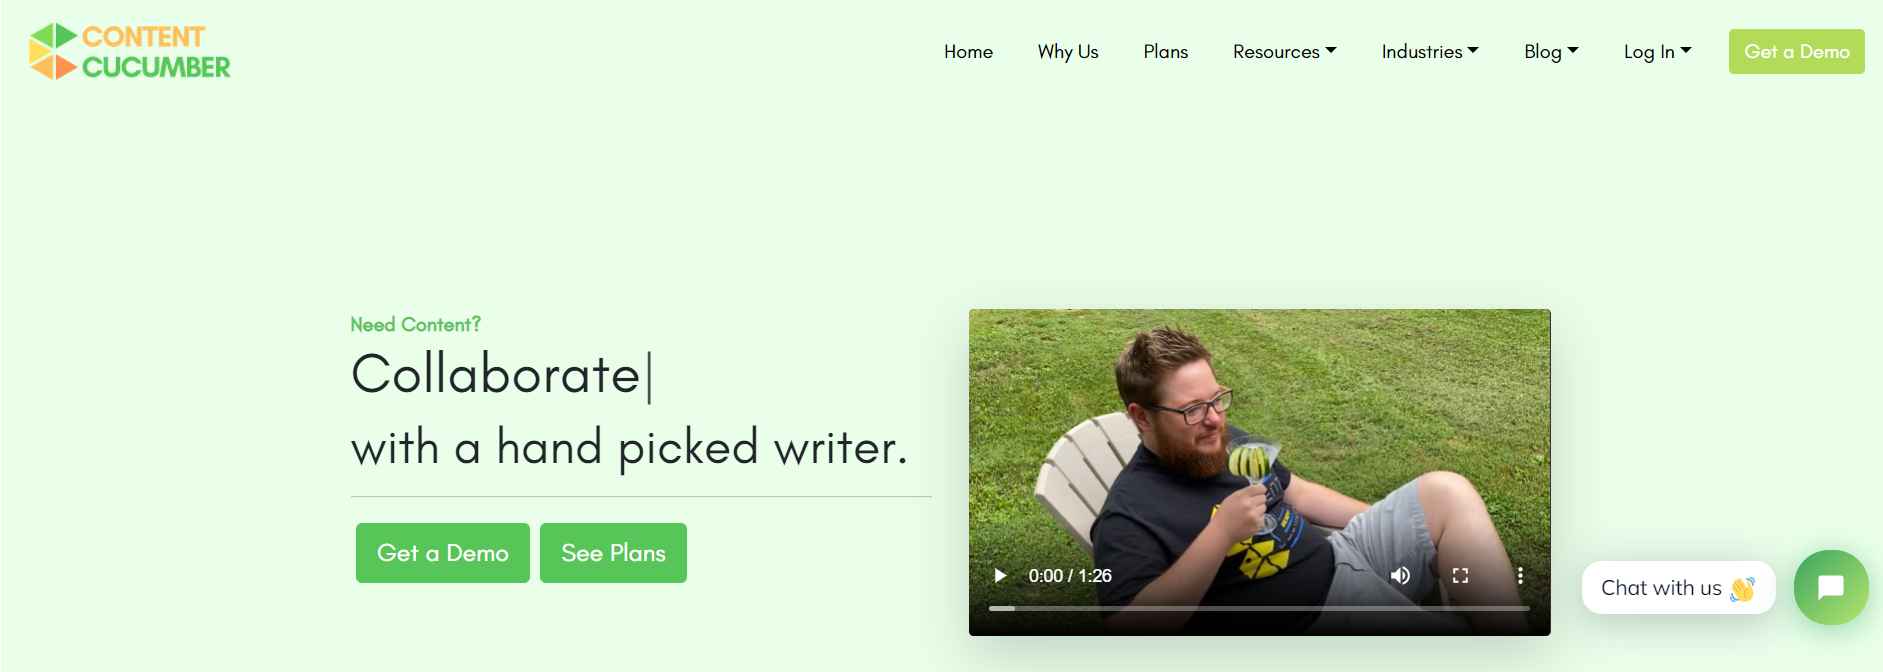 Best content writing agencies - Content Cucumber